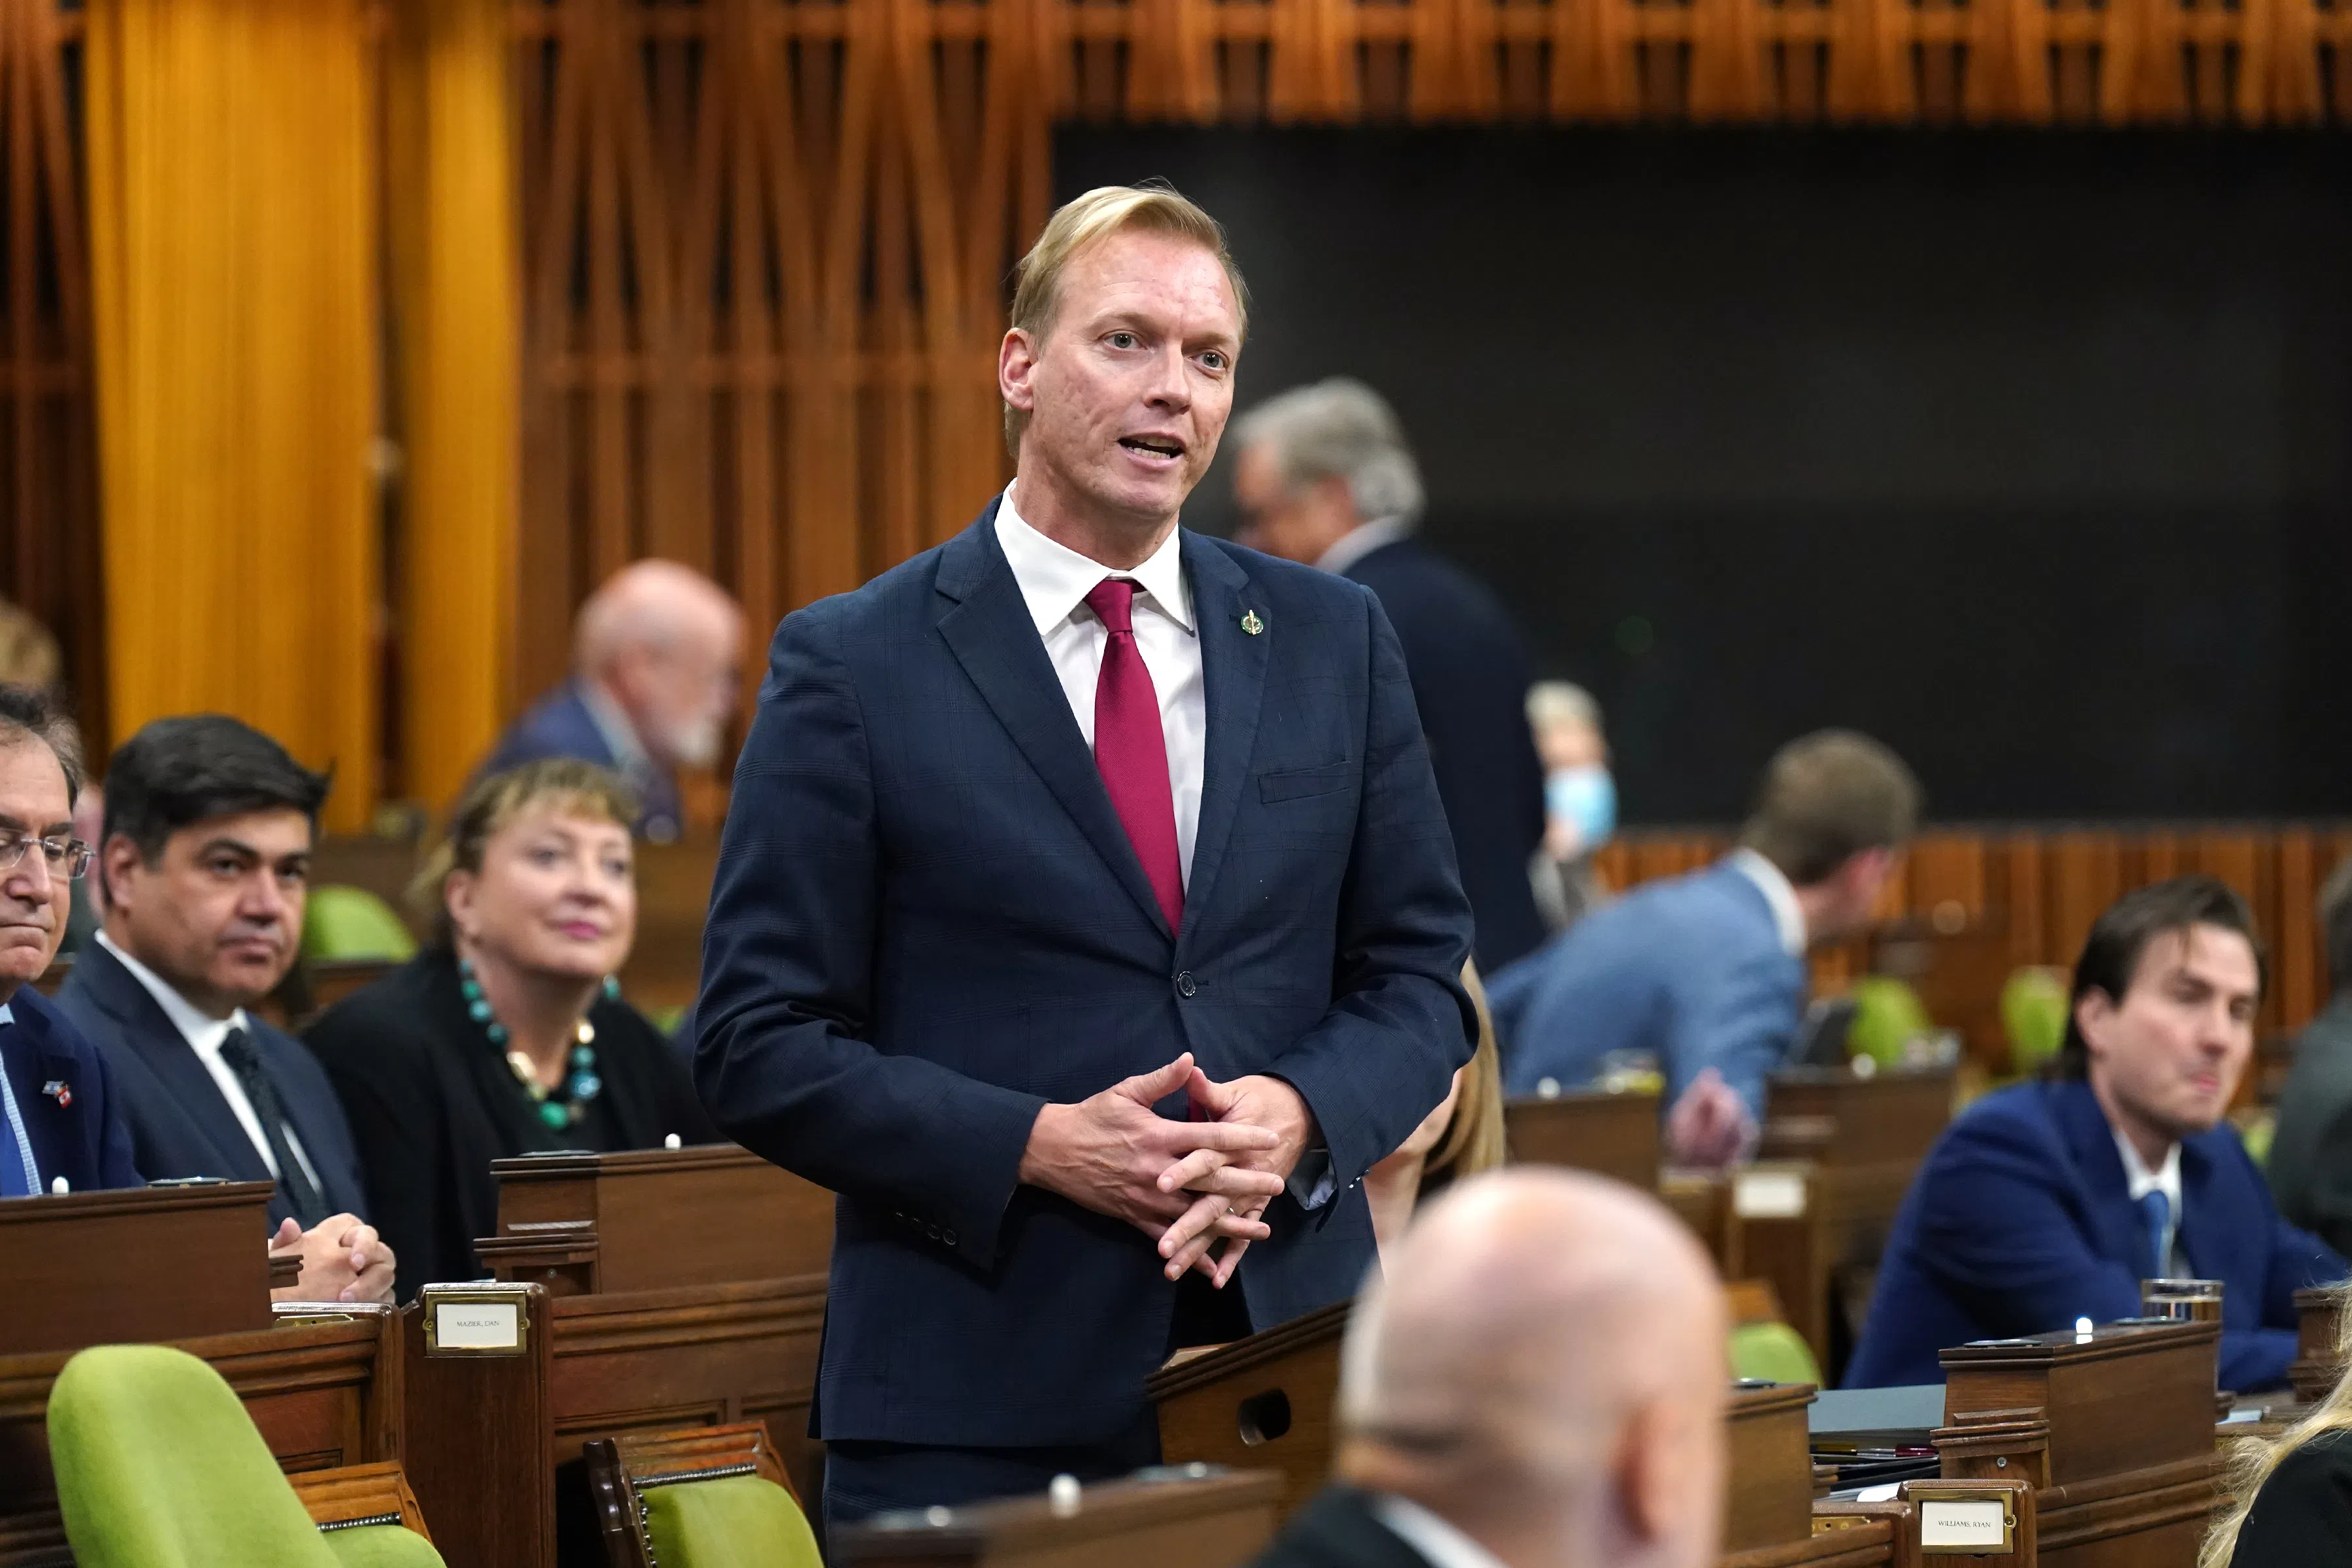 Local MP Ryan Williams criticizes high taxes